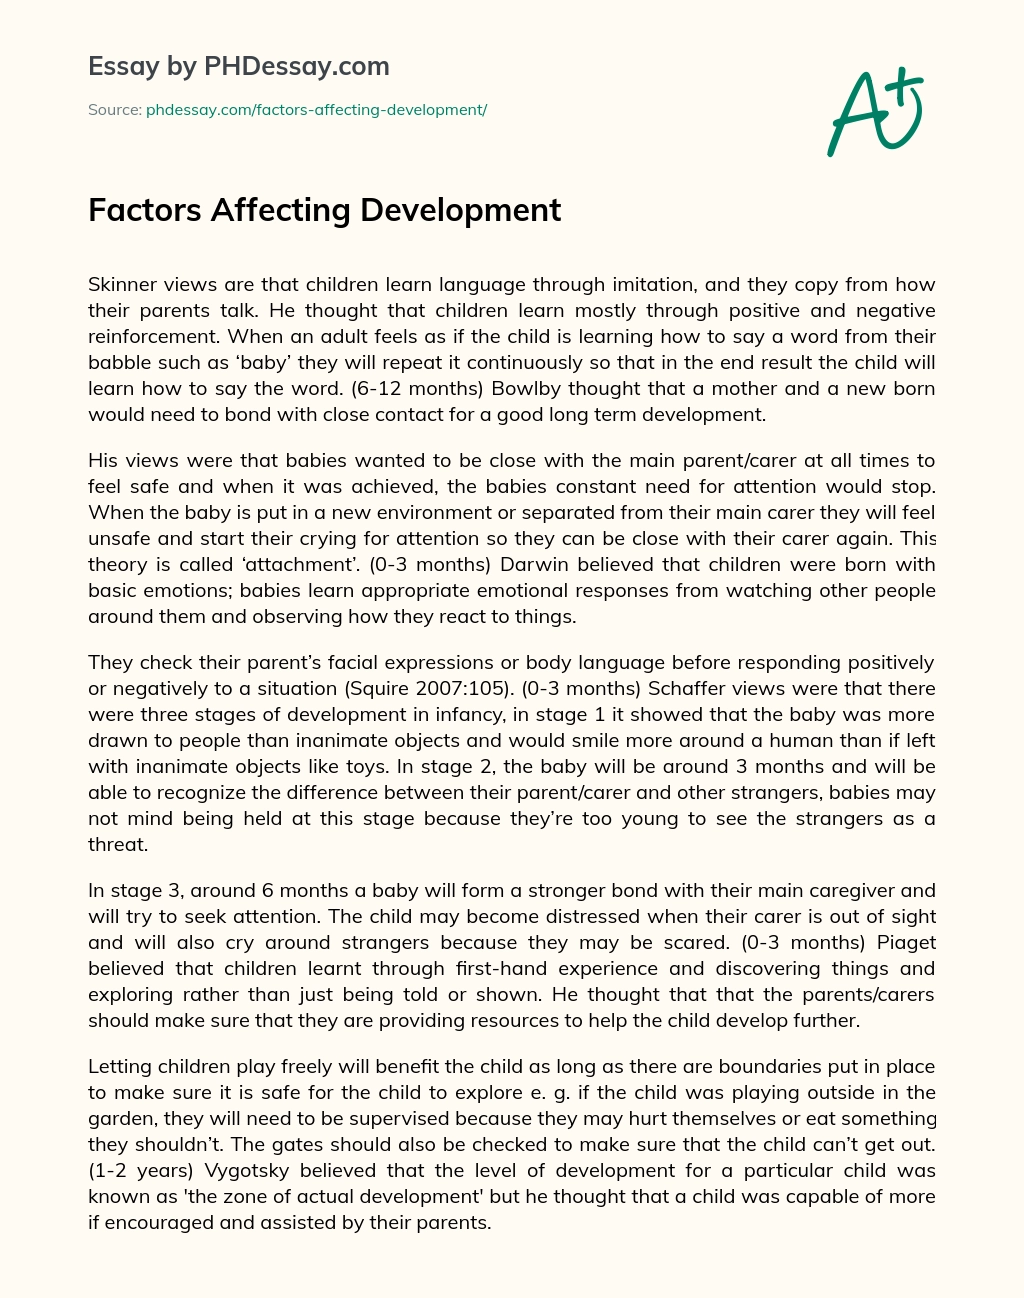 Factors Affecting Development essay